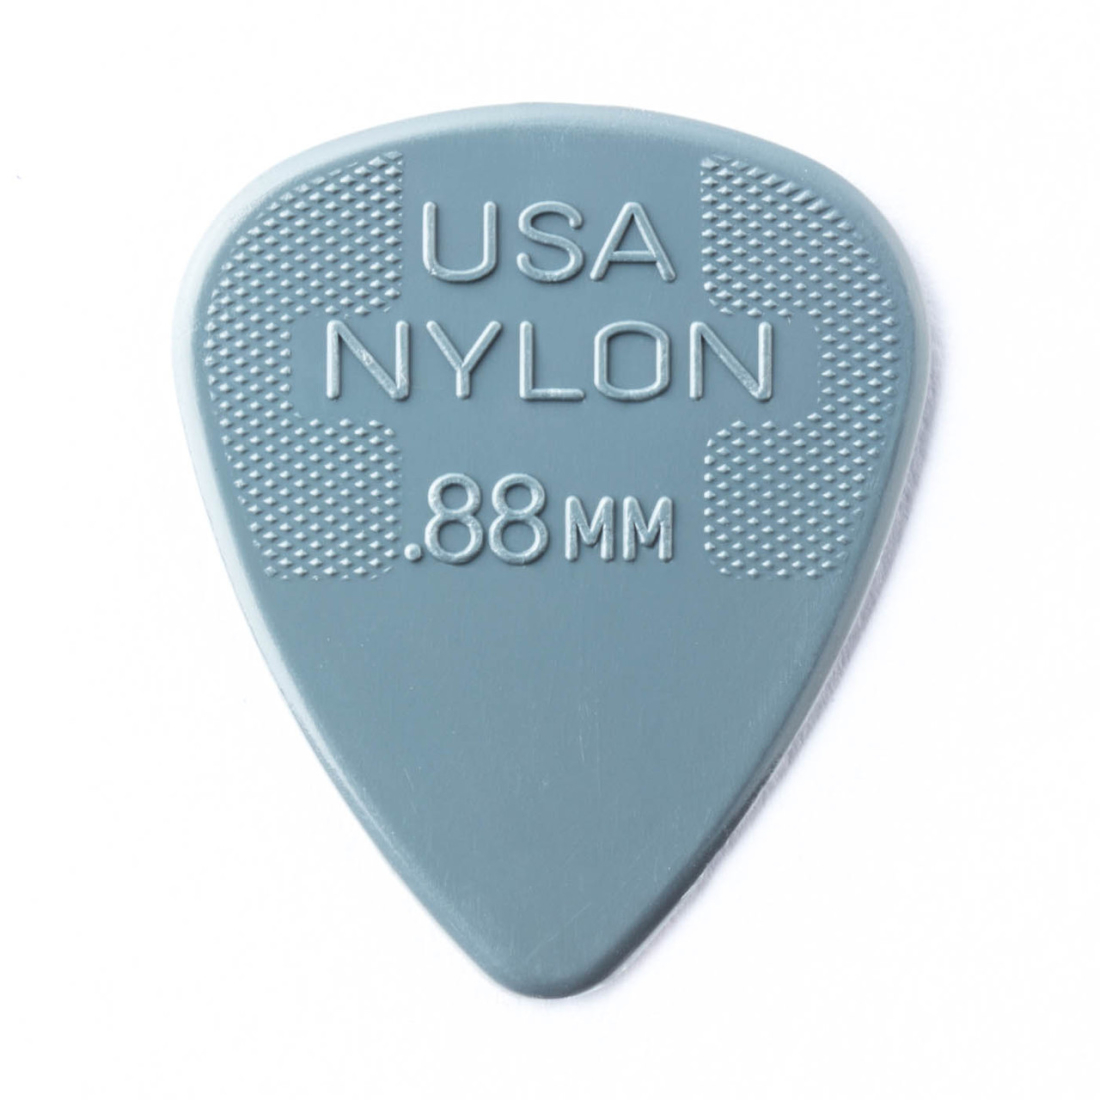 Nylon Standard Player Pack (72 Pack) - .88mm